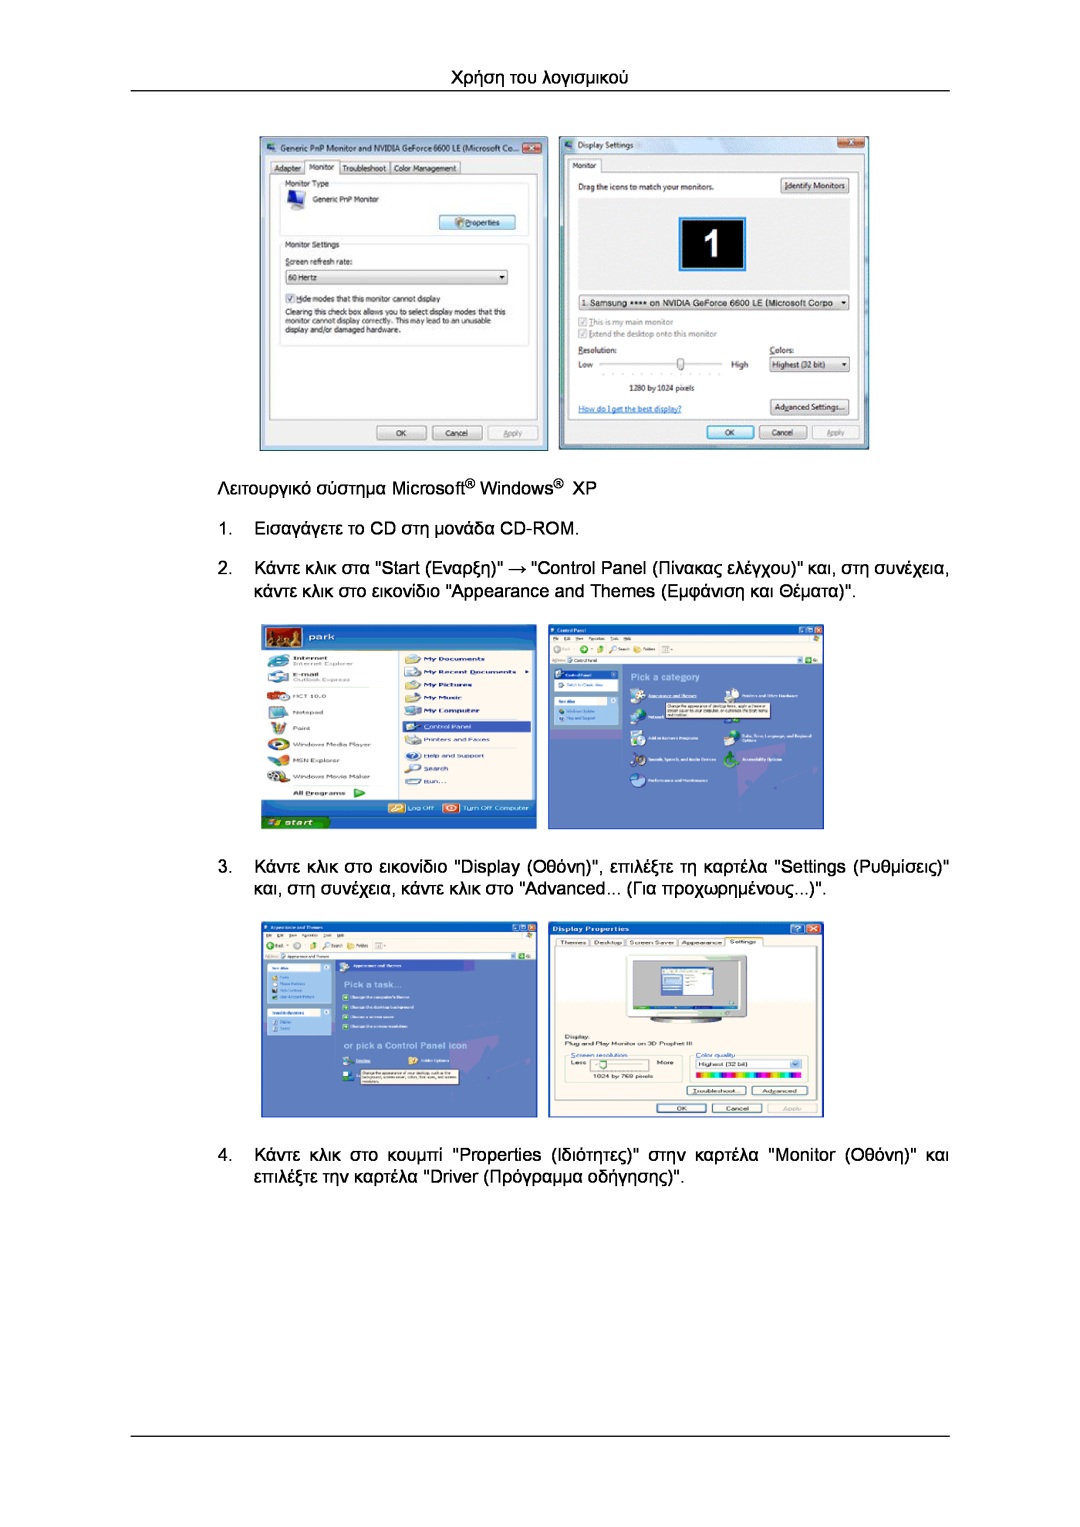 Samsung LH40GWTLBC/EN, LH40GWSLBC/EN, LH46GWPLBC/EN manual Χρήση του λογισμικού, Λειτουργικό σύστημα Microsoft Windows XP 